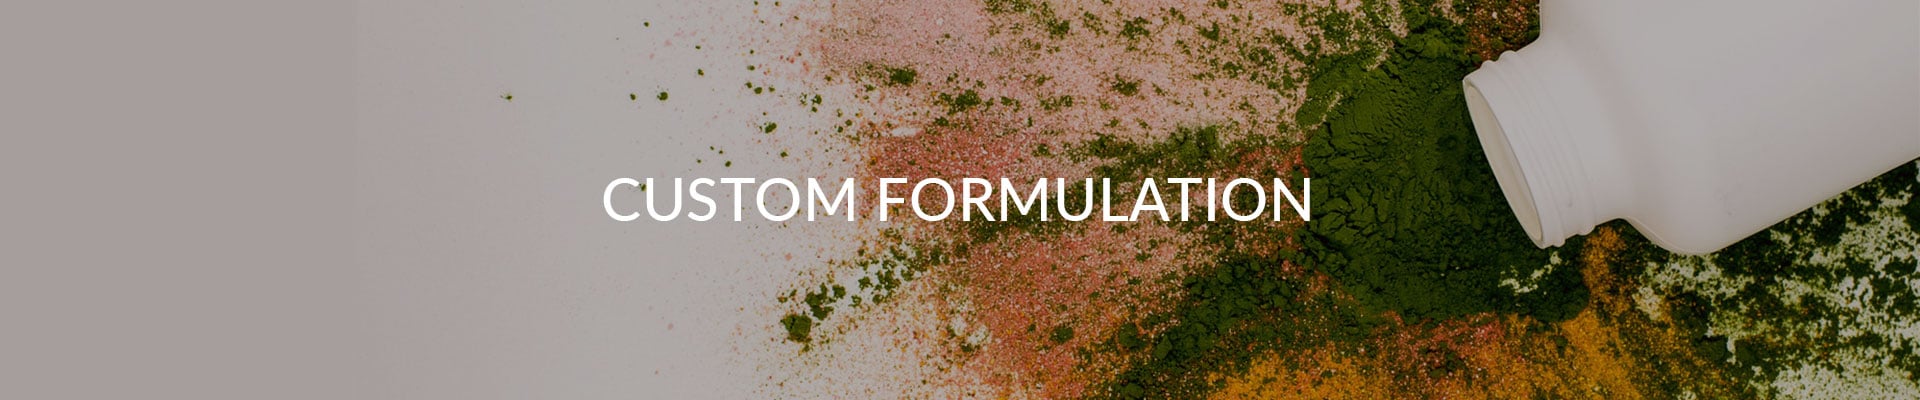 Custom Formulation Robinson Pharma, Inc.